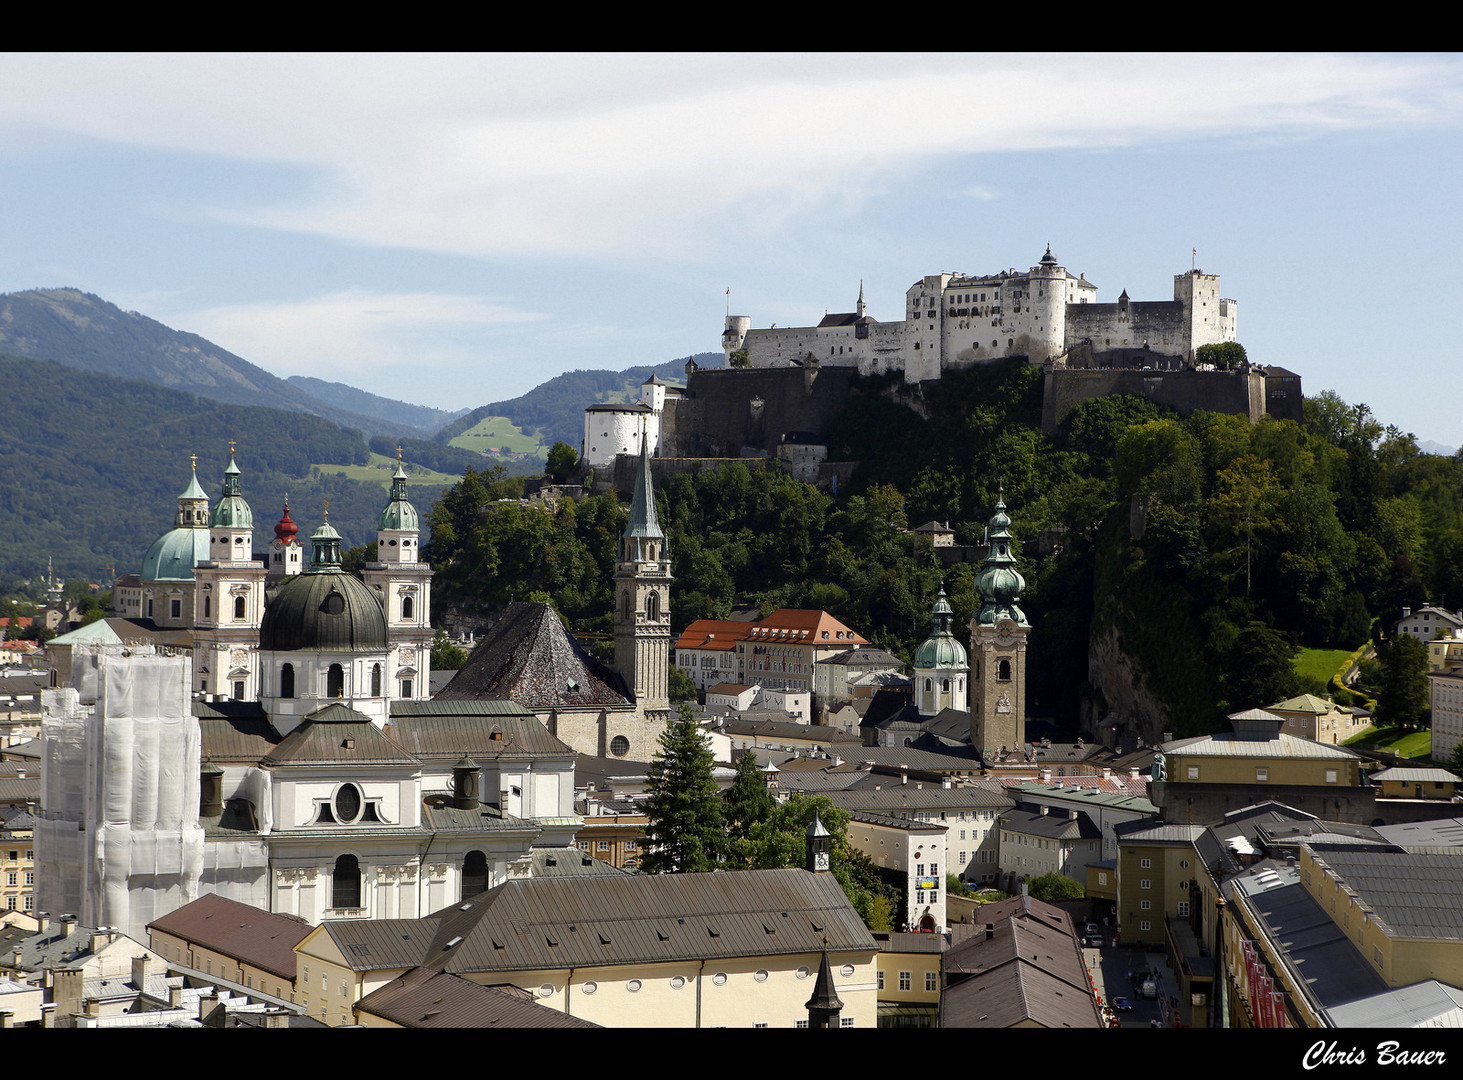 Hohe Festung Salzburg